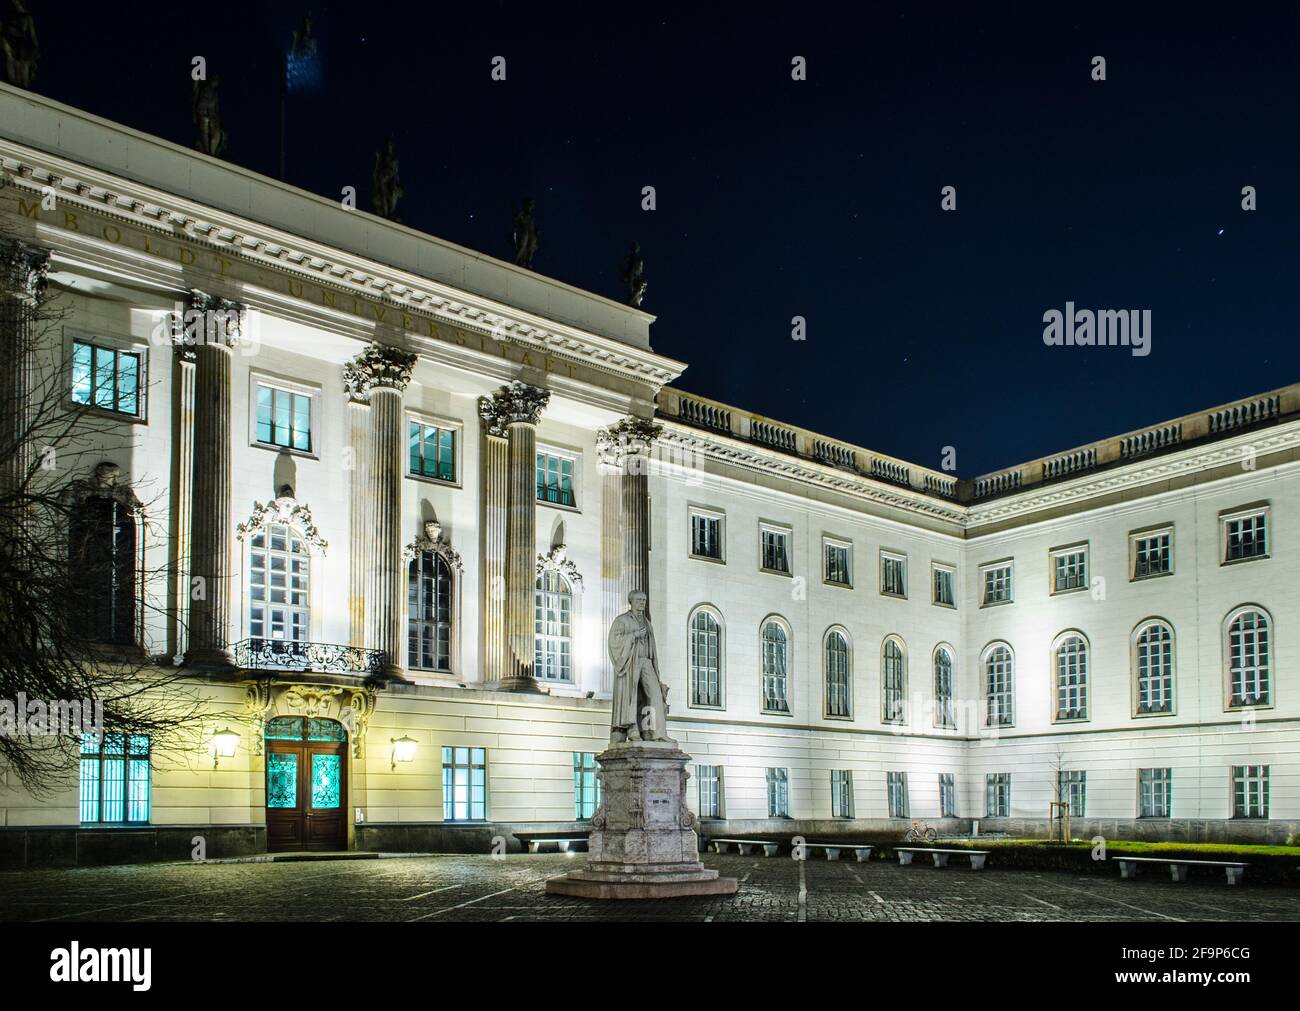 night view of inner yard of humboldt university in berlin. Stock Photo